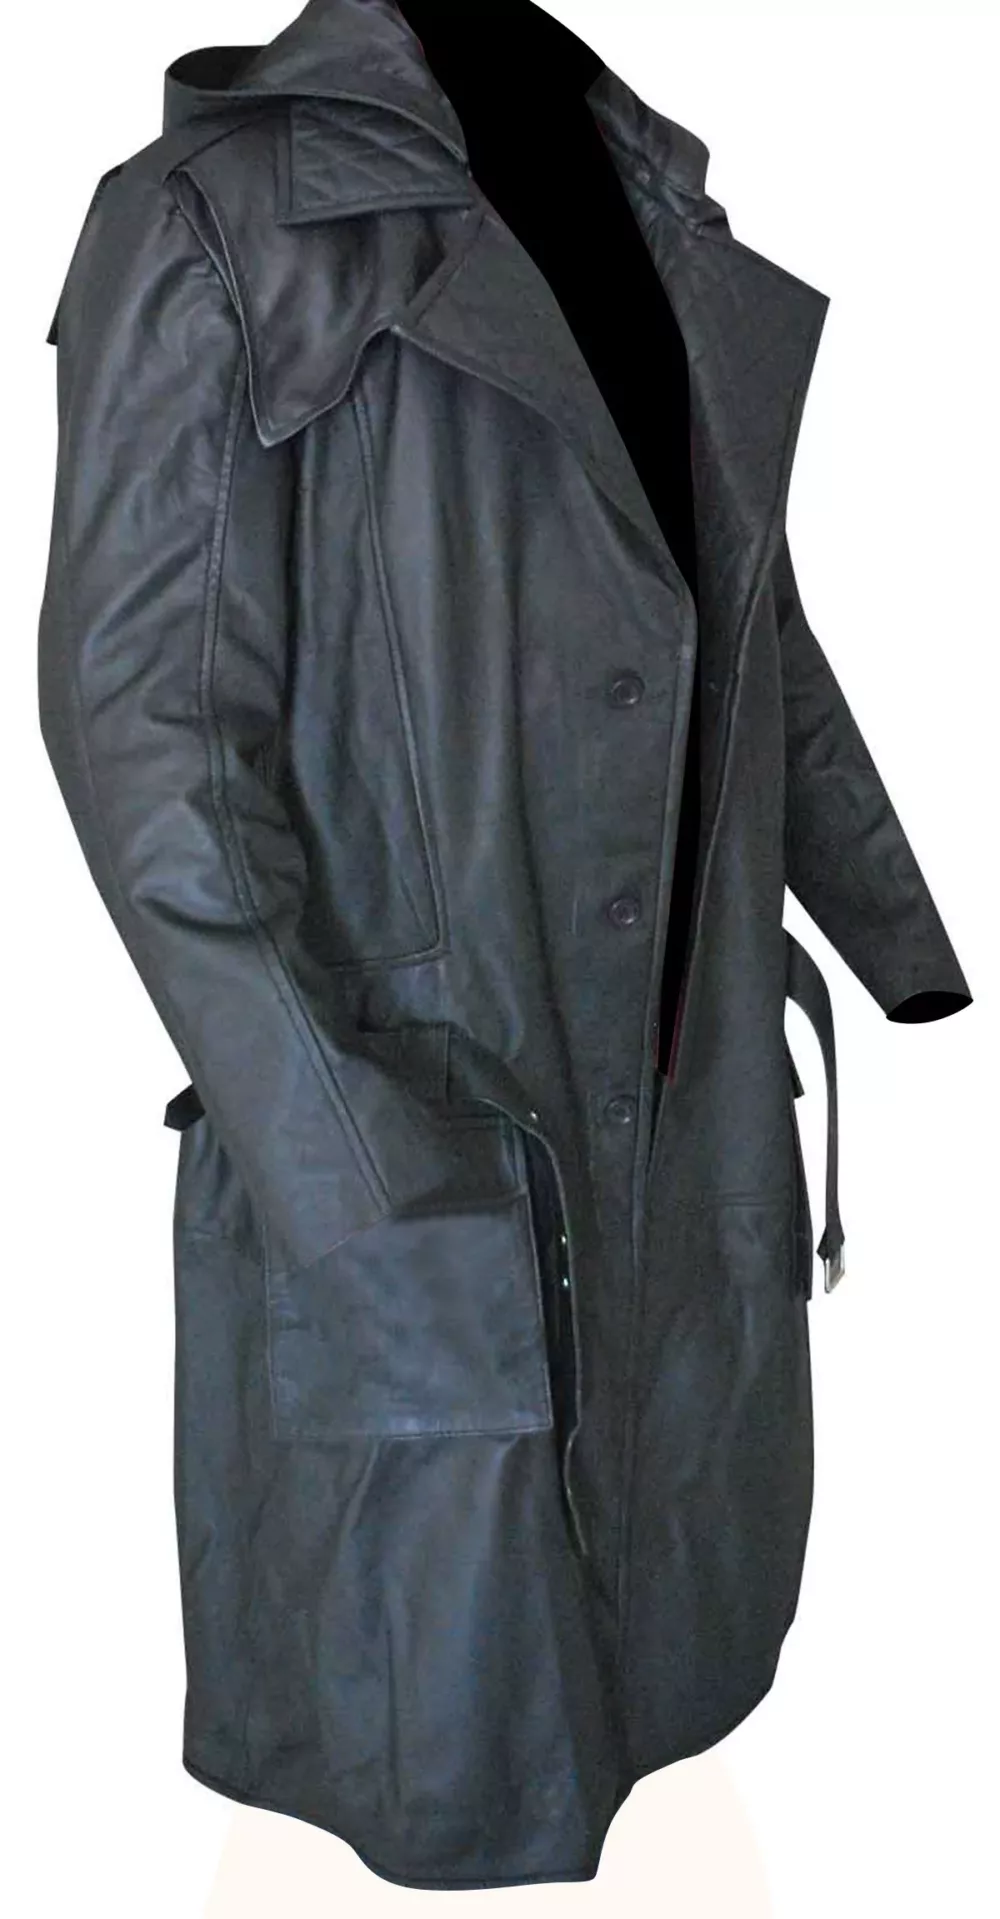 Jacob Frye Assassin's Creed Syndicate Coat Costume